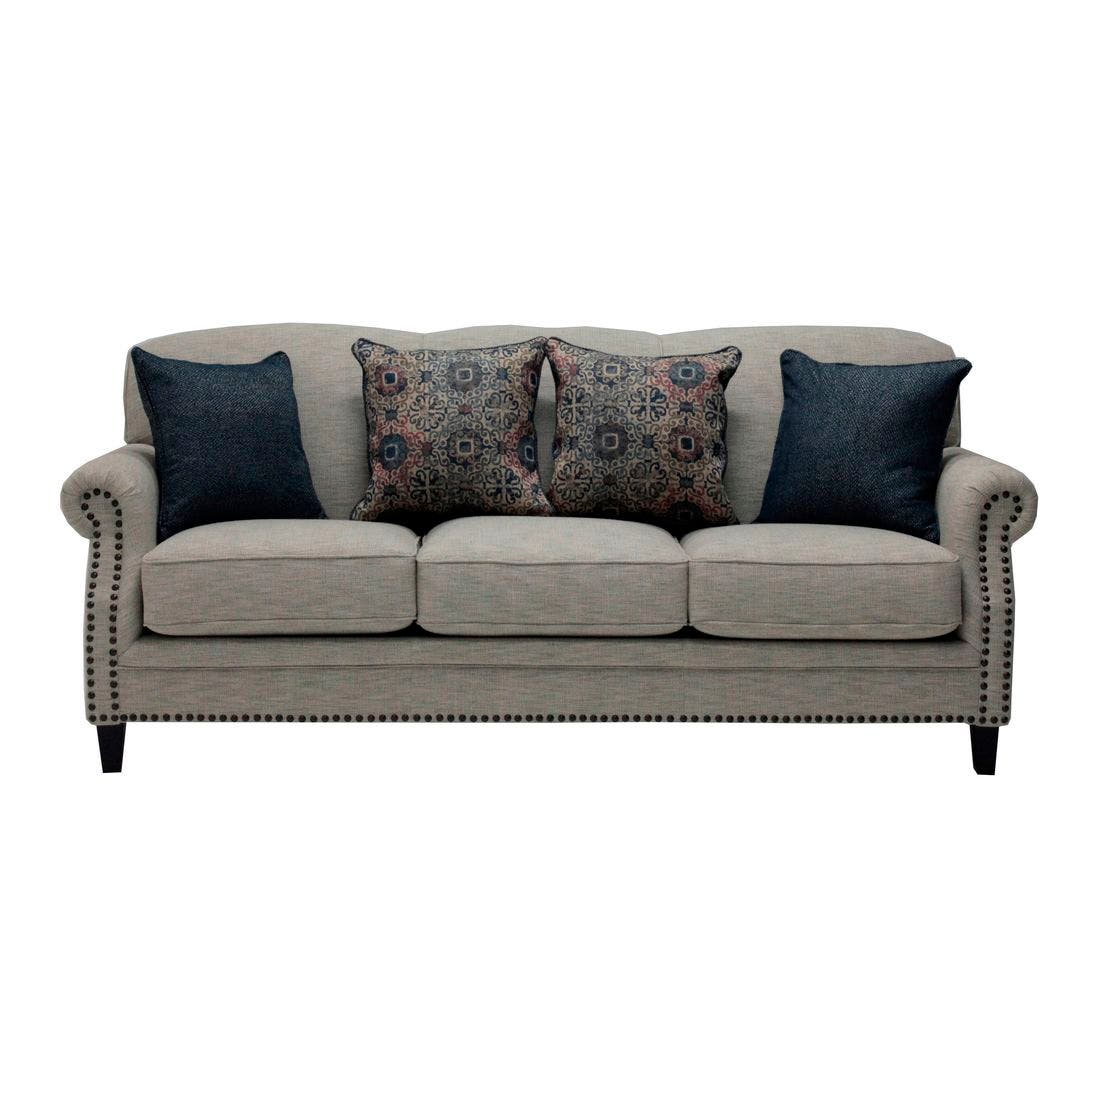 19146495-harrison-furniture-sofa-recliner-sofas-01